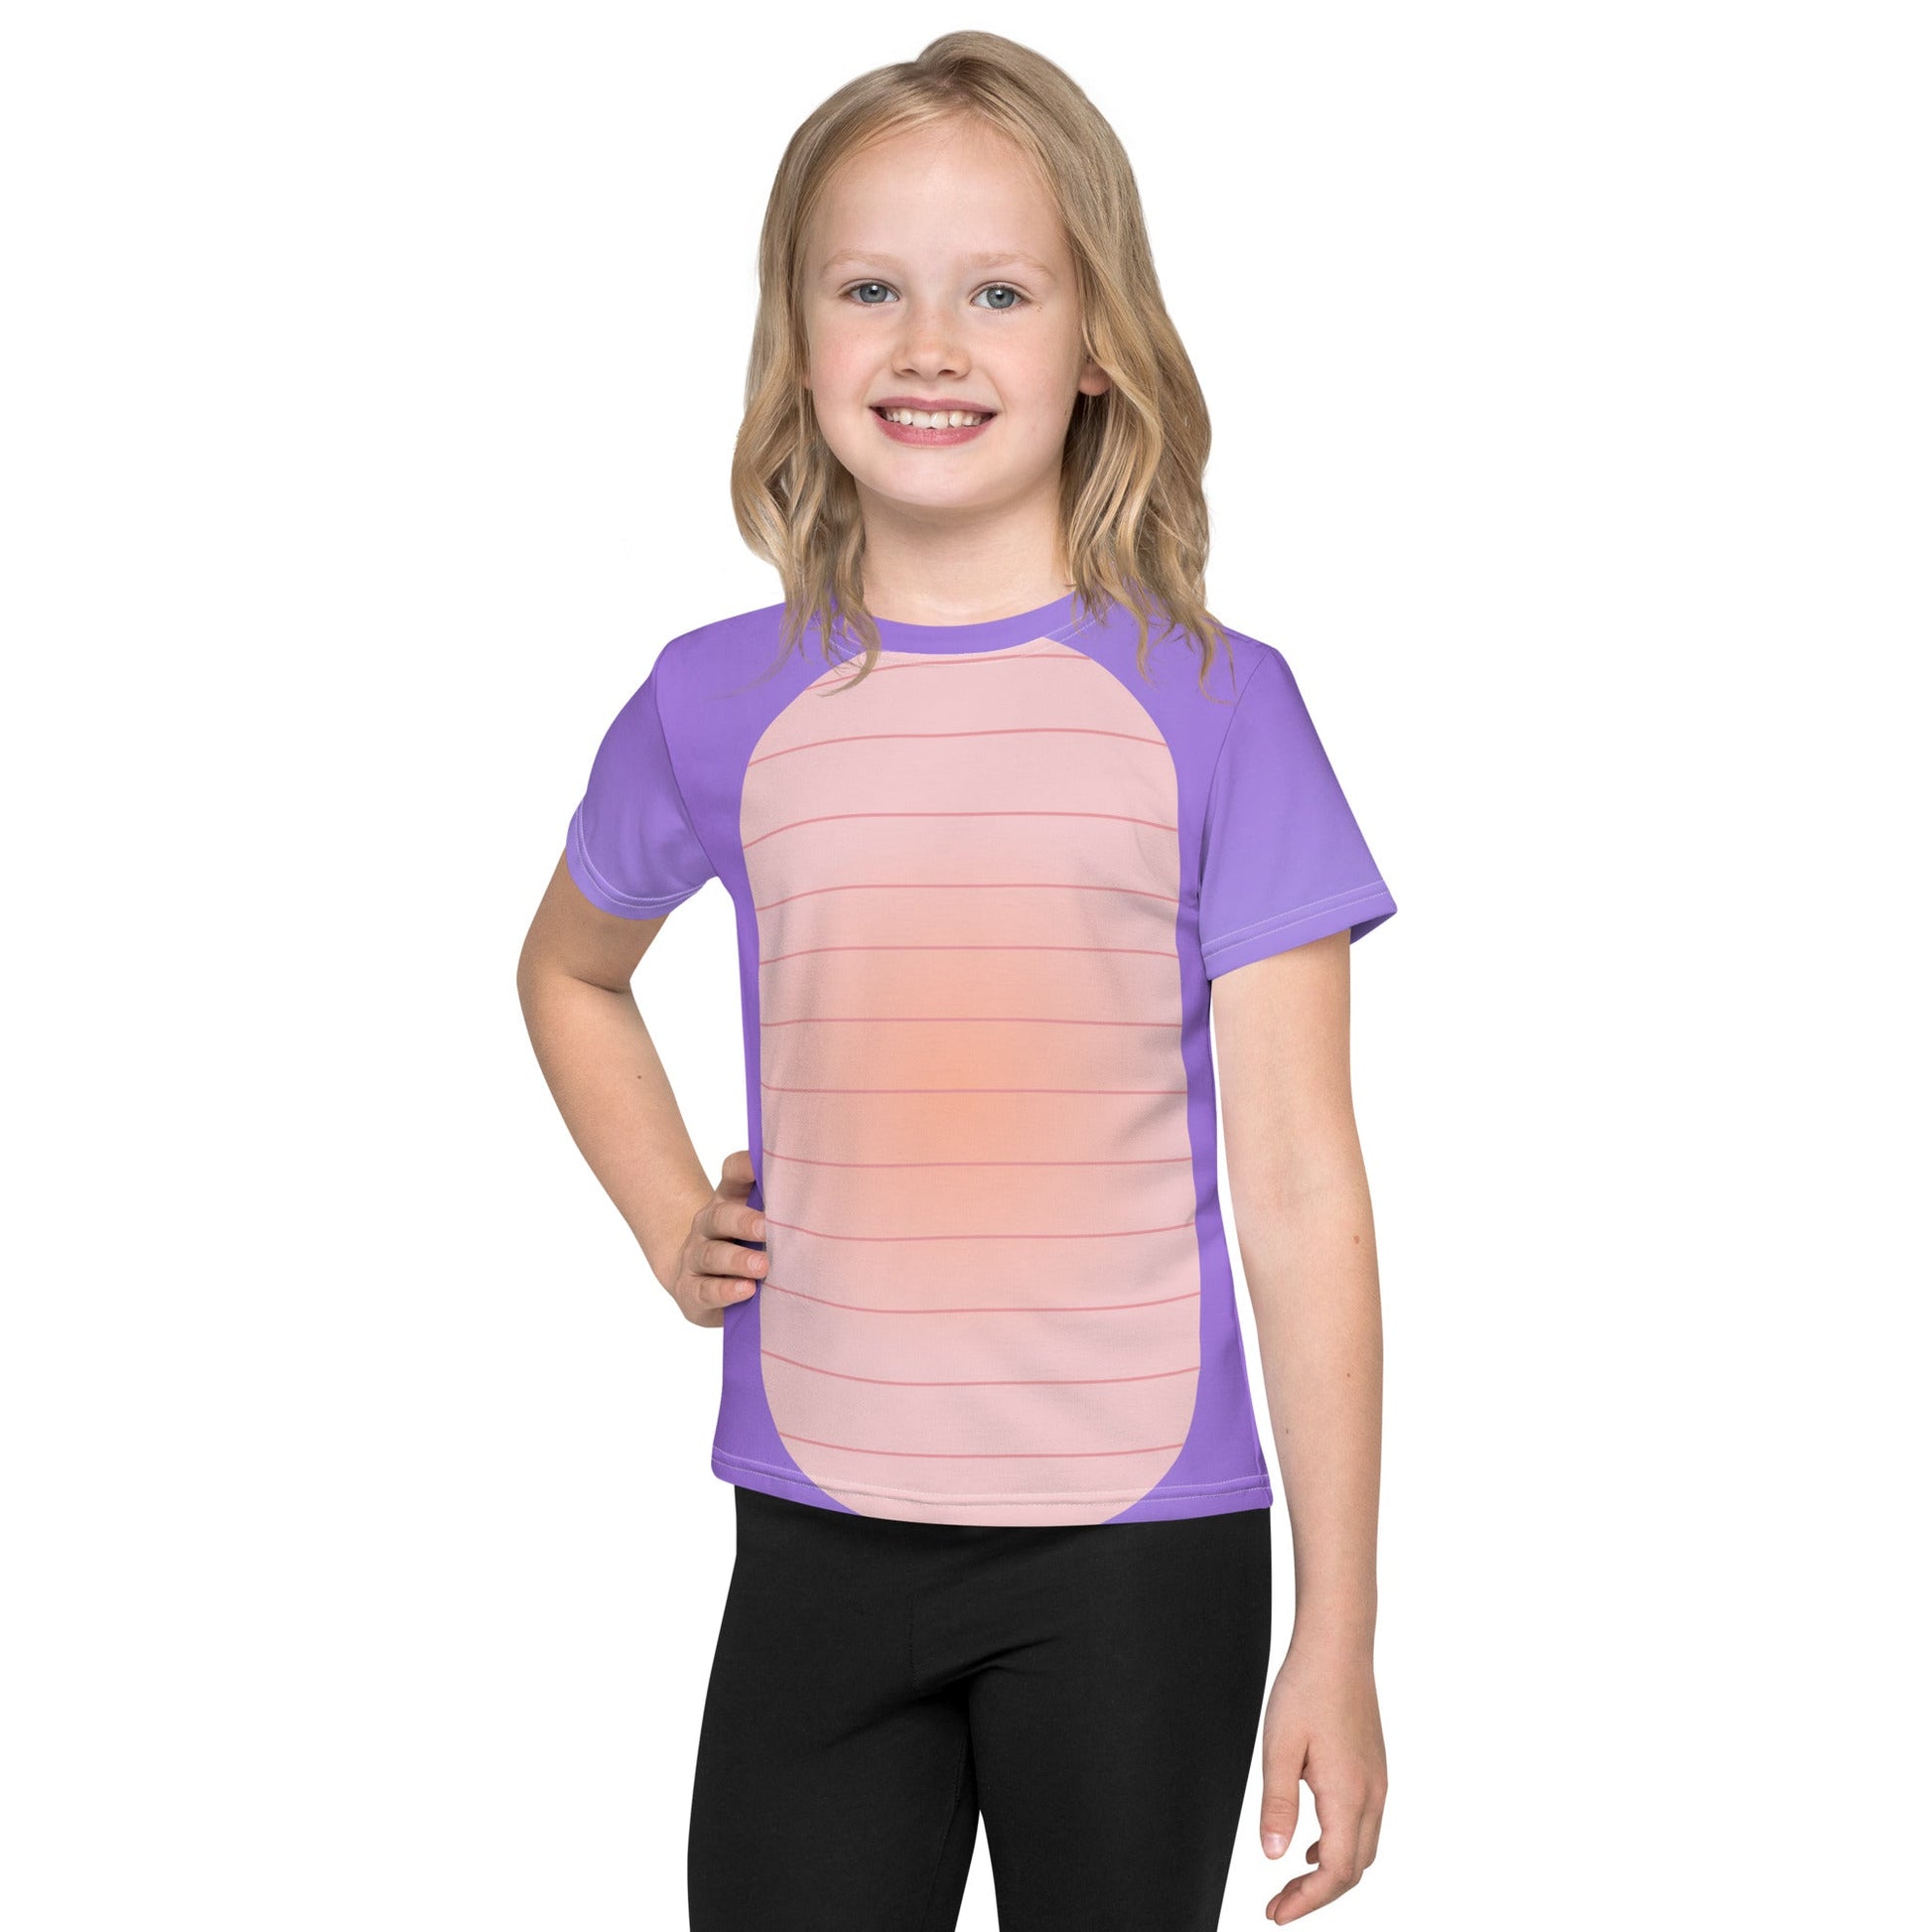 The Friendly Dragon Kids crew neck t-shirt coordinating disney stylecosplay styledisney kid clothing#tag4##tag5##tag6#